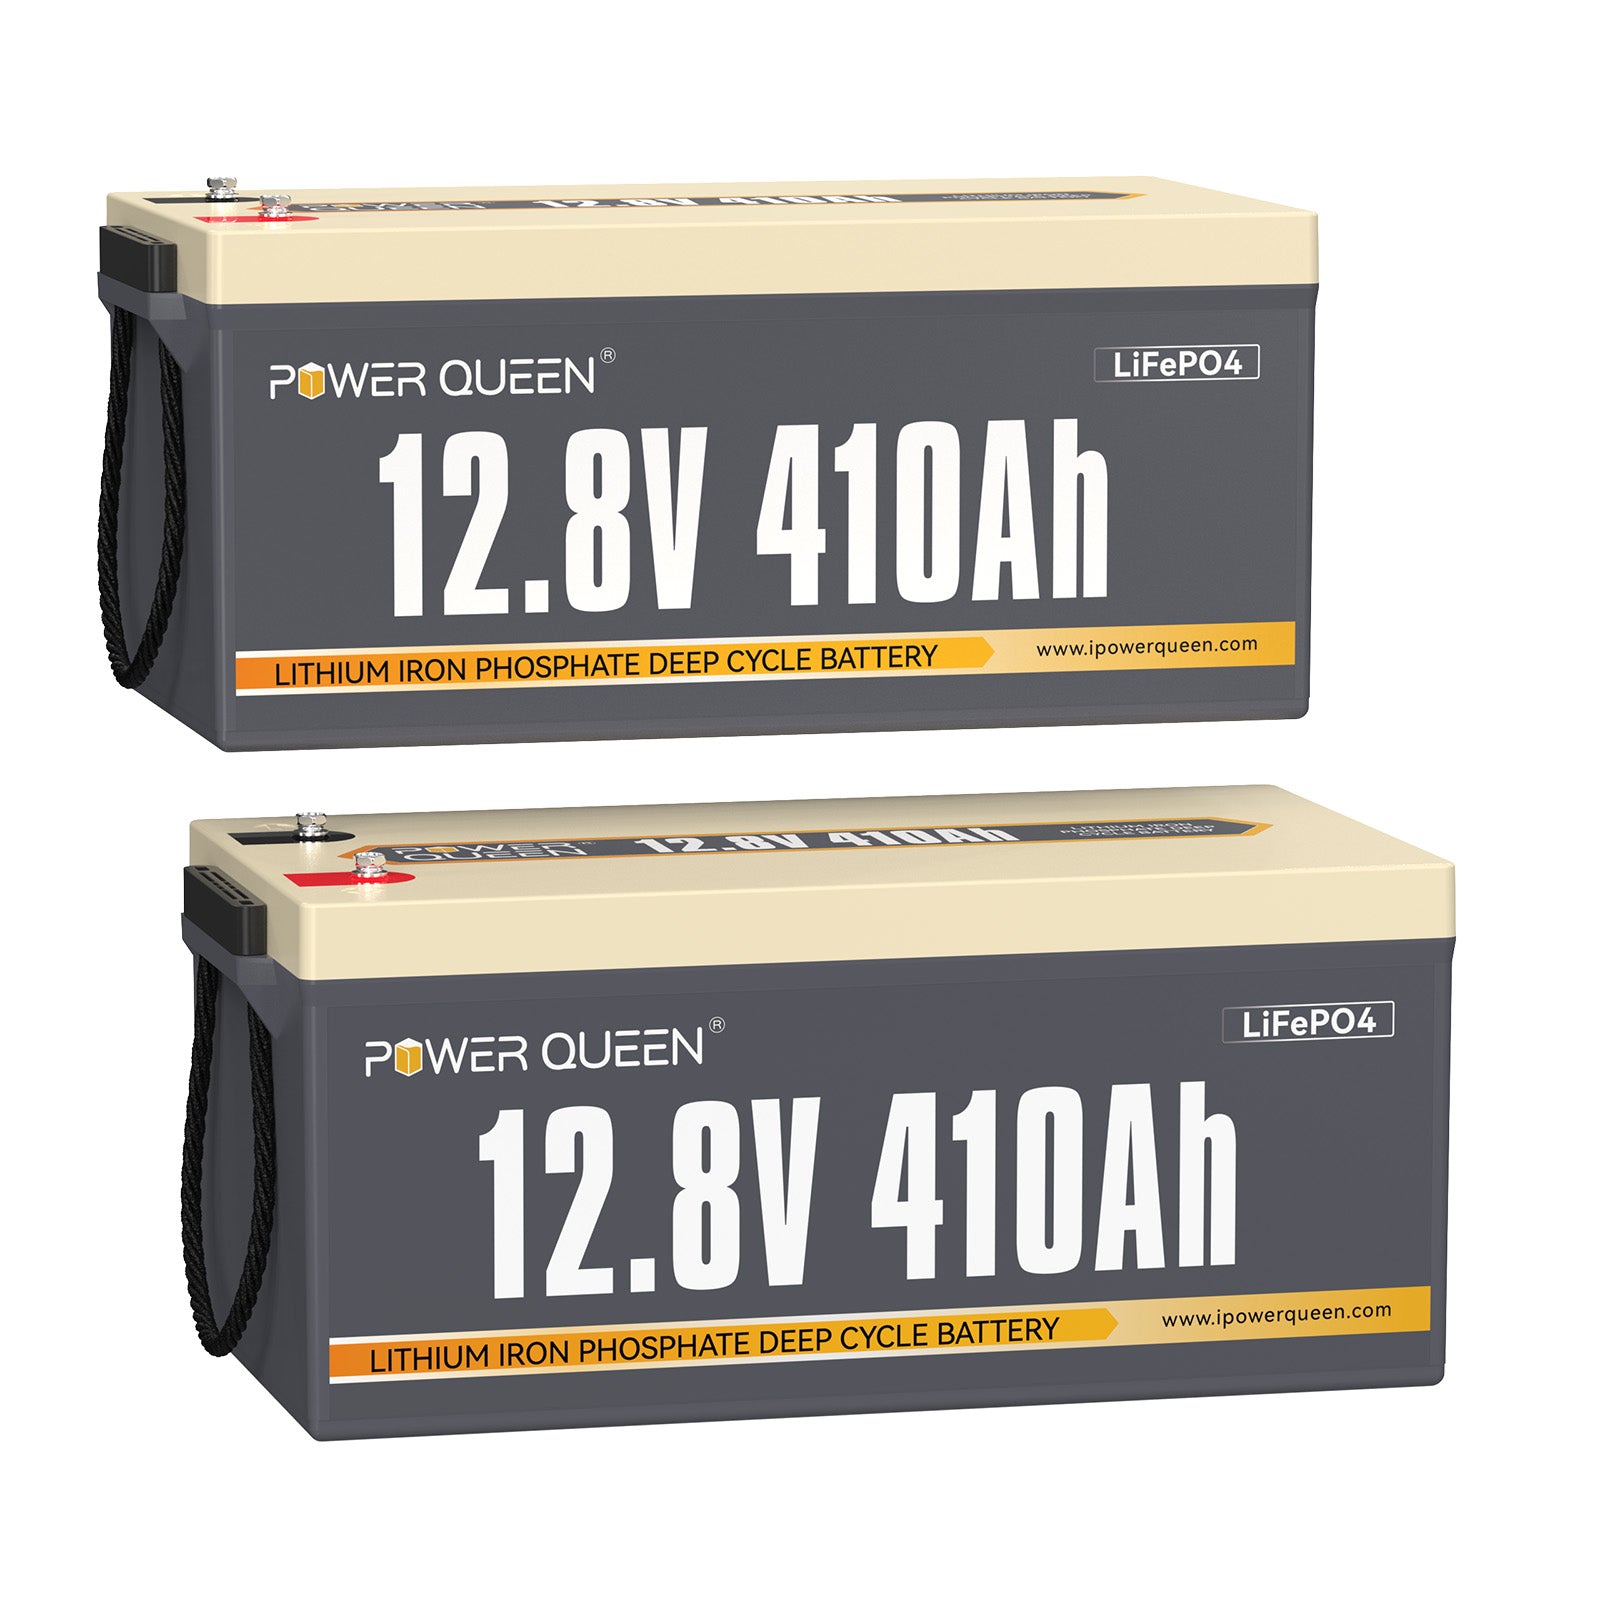 【0% IVA】Batteria Power Queen 12V 410Ah LiFePO4, BMS integrato da 250A